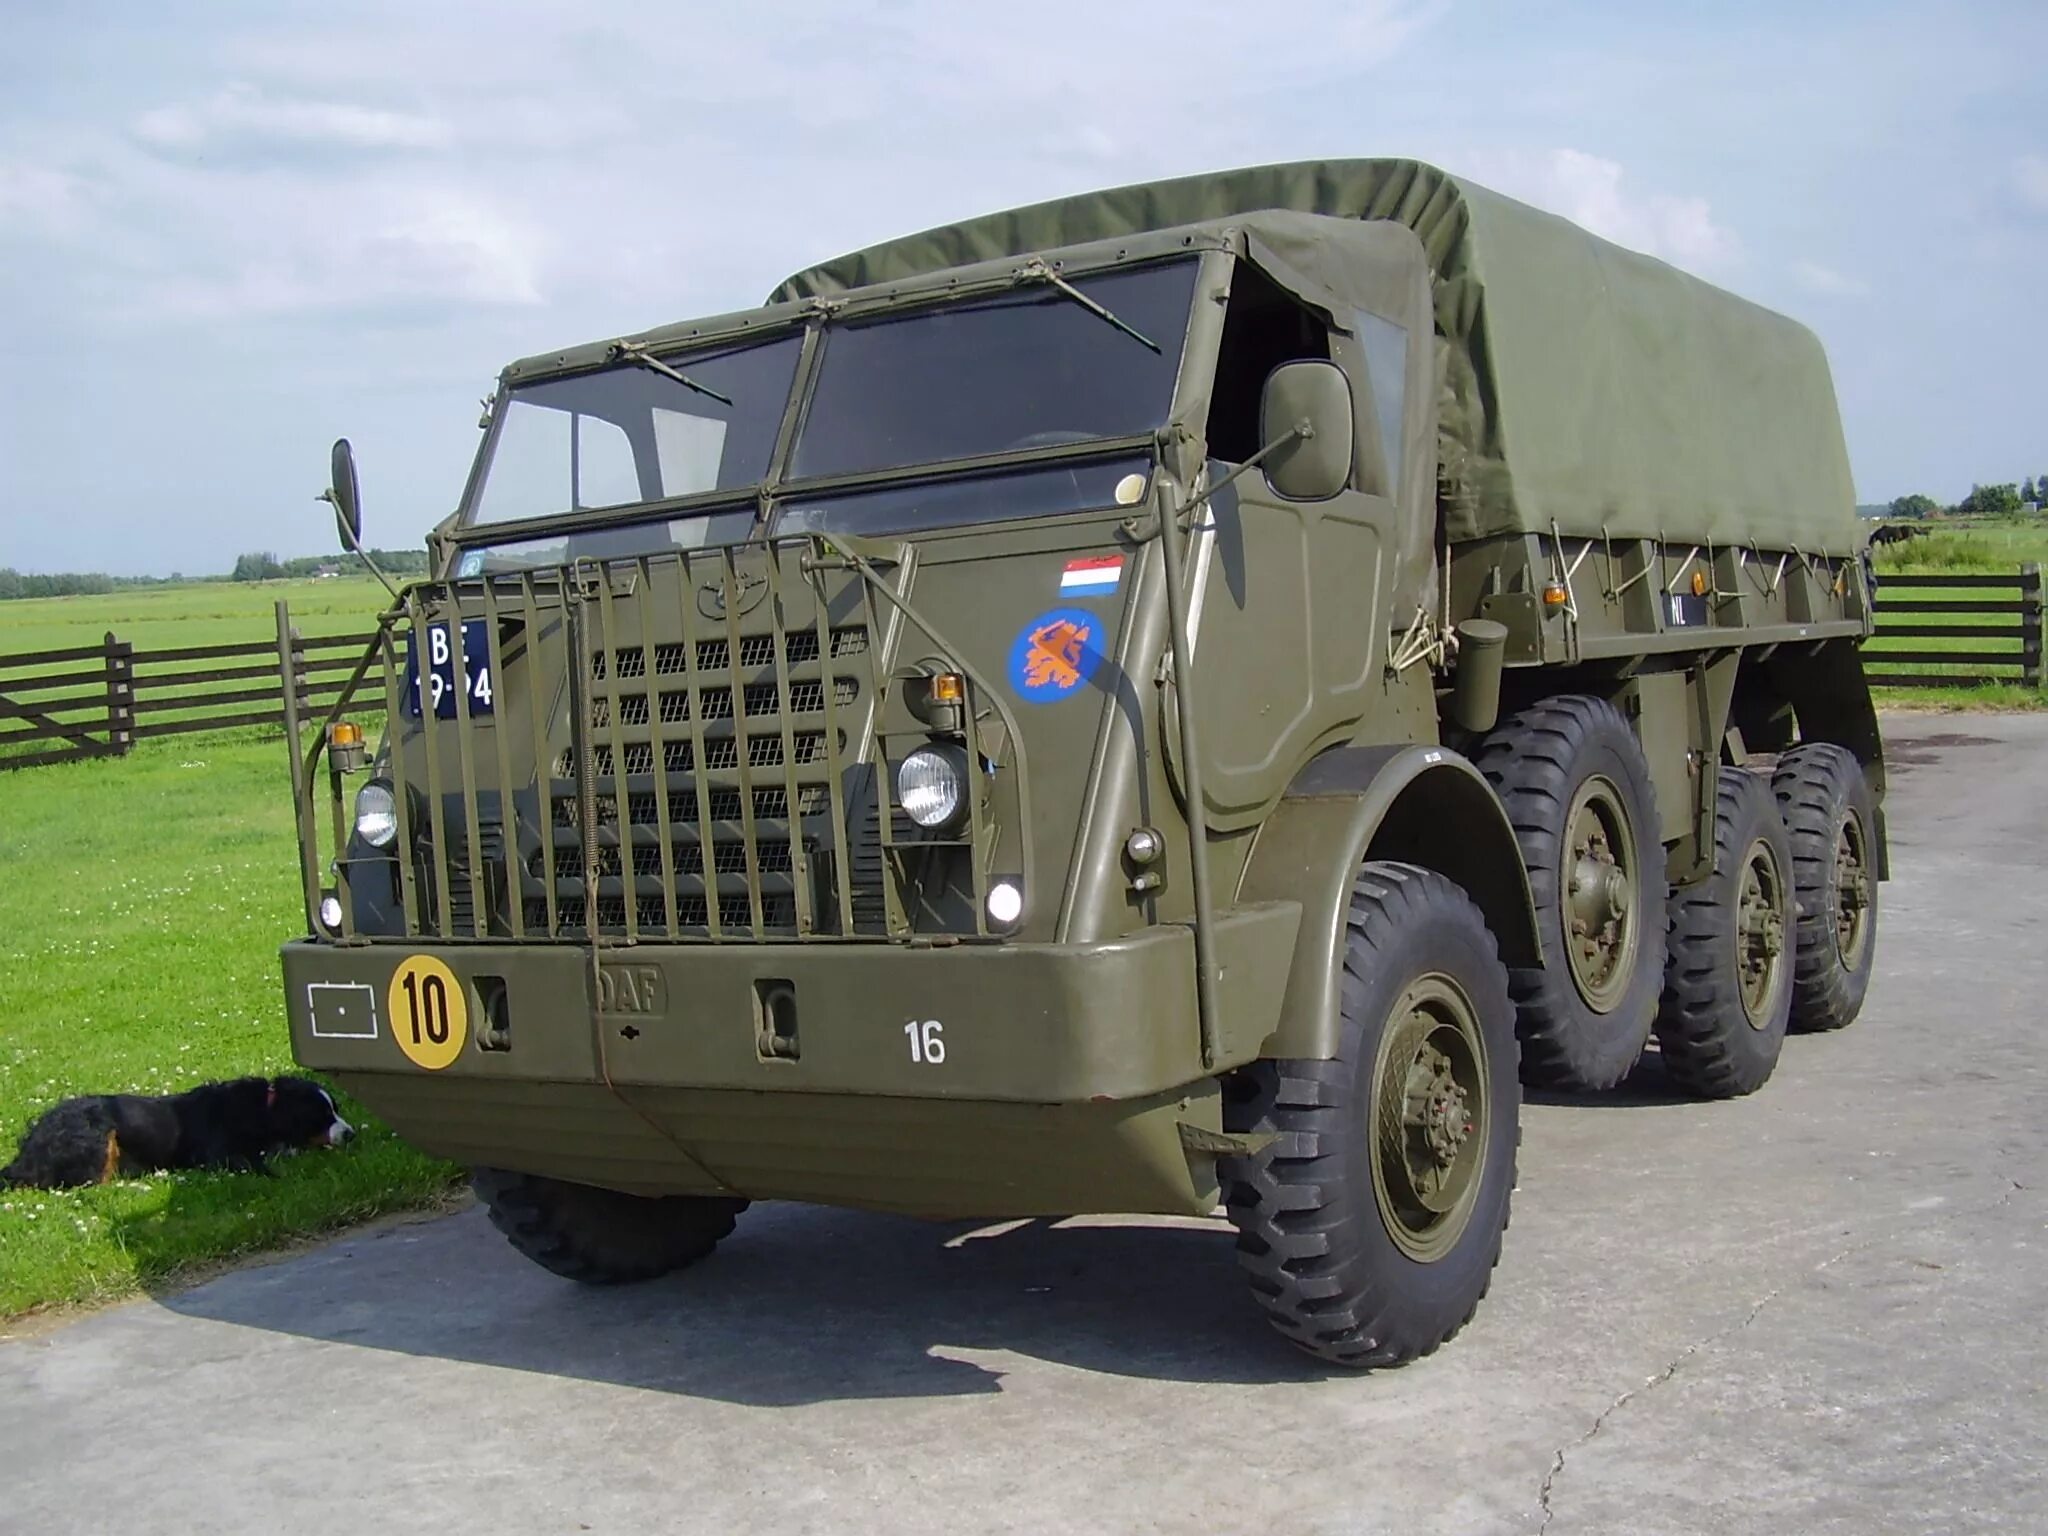 Военный грузовой автомобиль. DAF ya328. DAF ya-328 Military Truck. Iveco Army Truck 4x4. Фиат-6611м армейский грузовик.